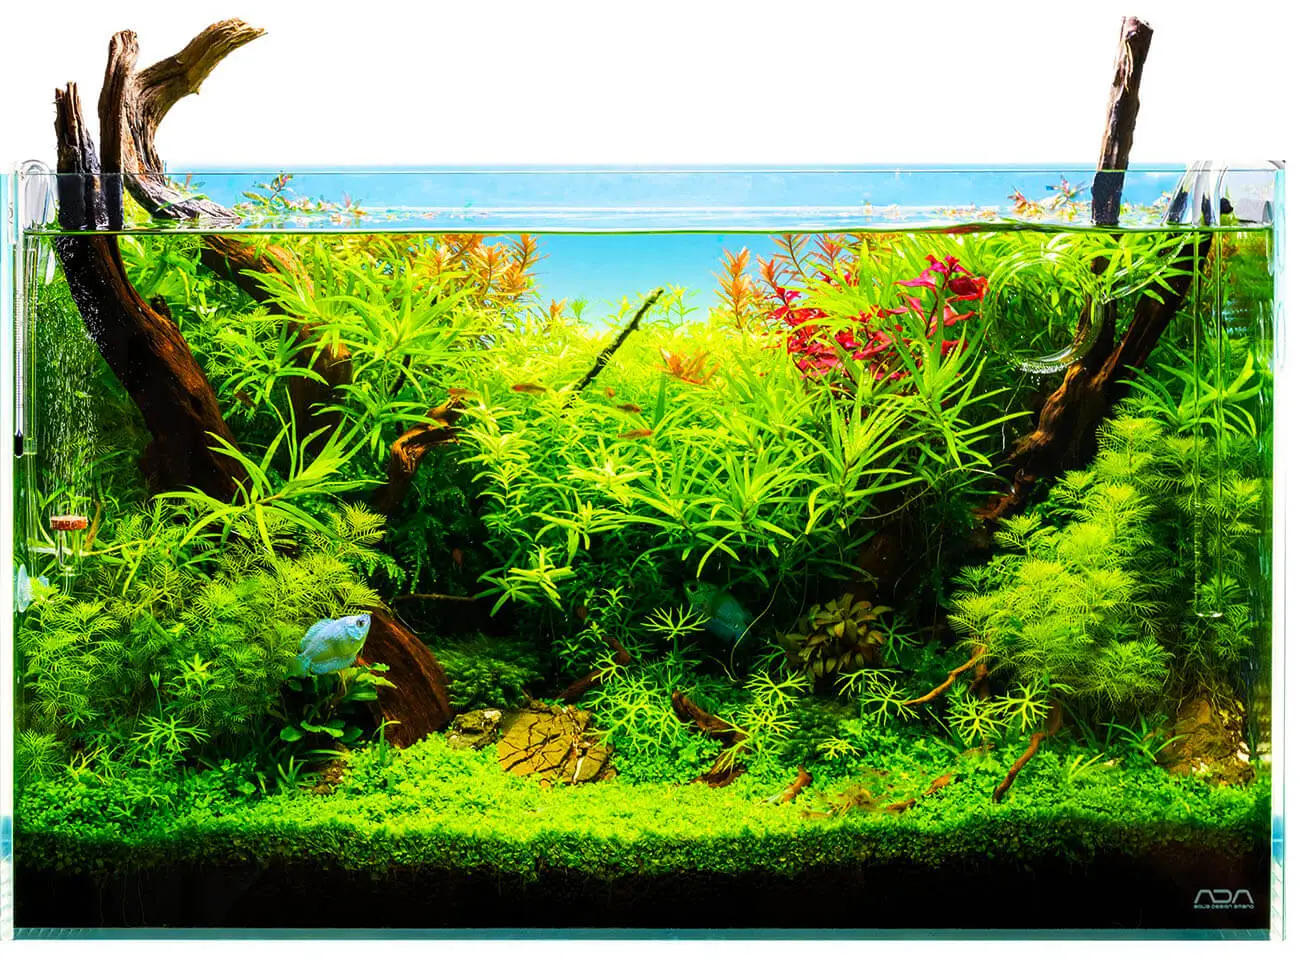 Ein 60l Aquascape von Aquascaper Fabian Beck (Scapeling) mit grünen Aquarienpflanzen und Wurzelholz als Dekoration